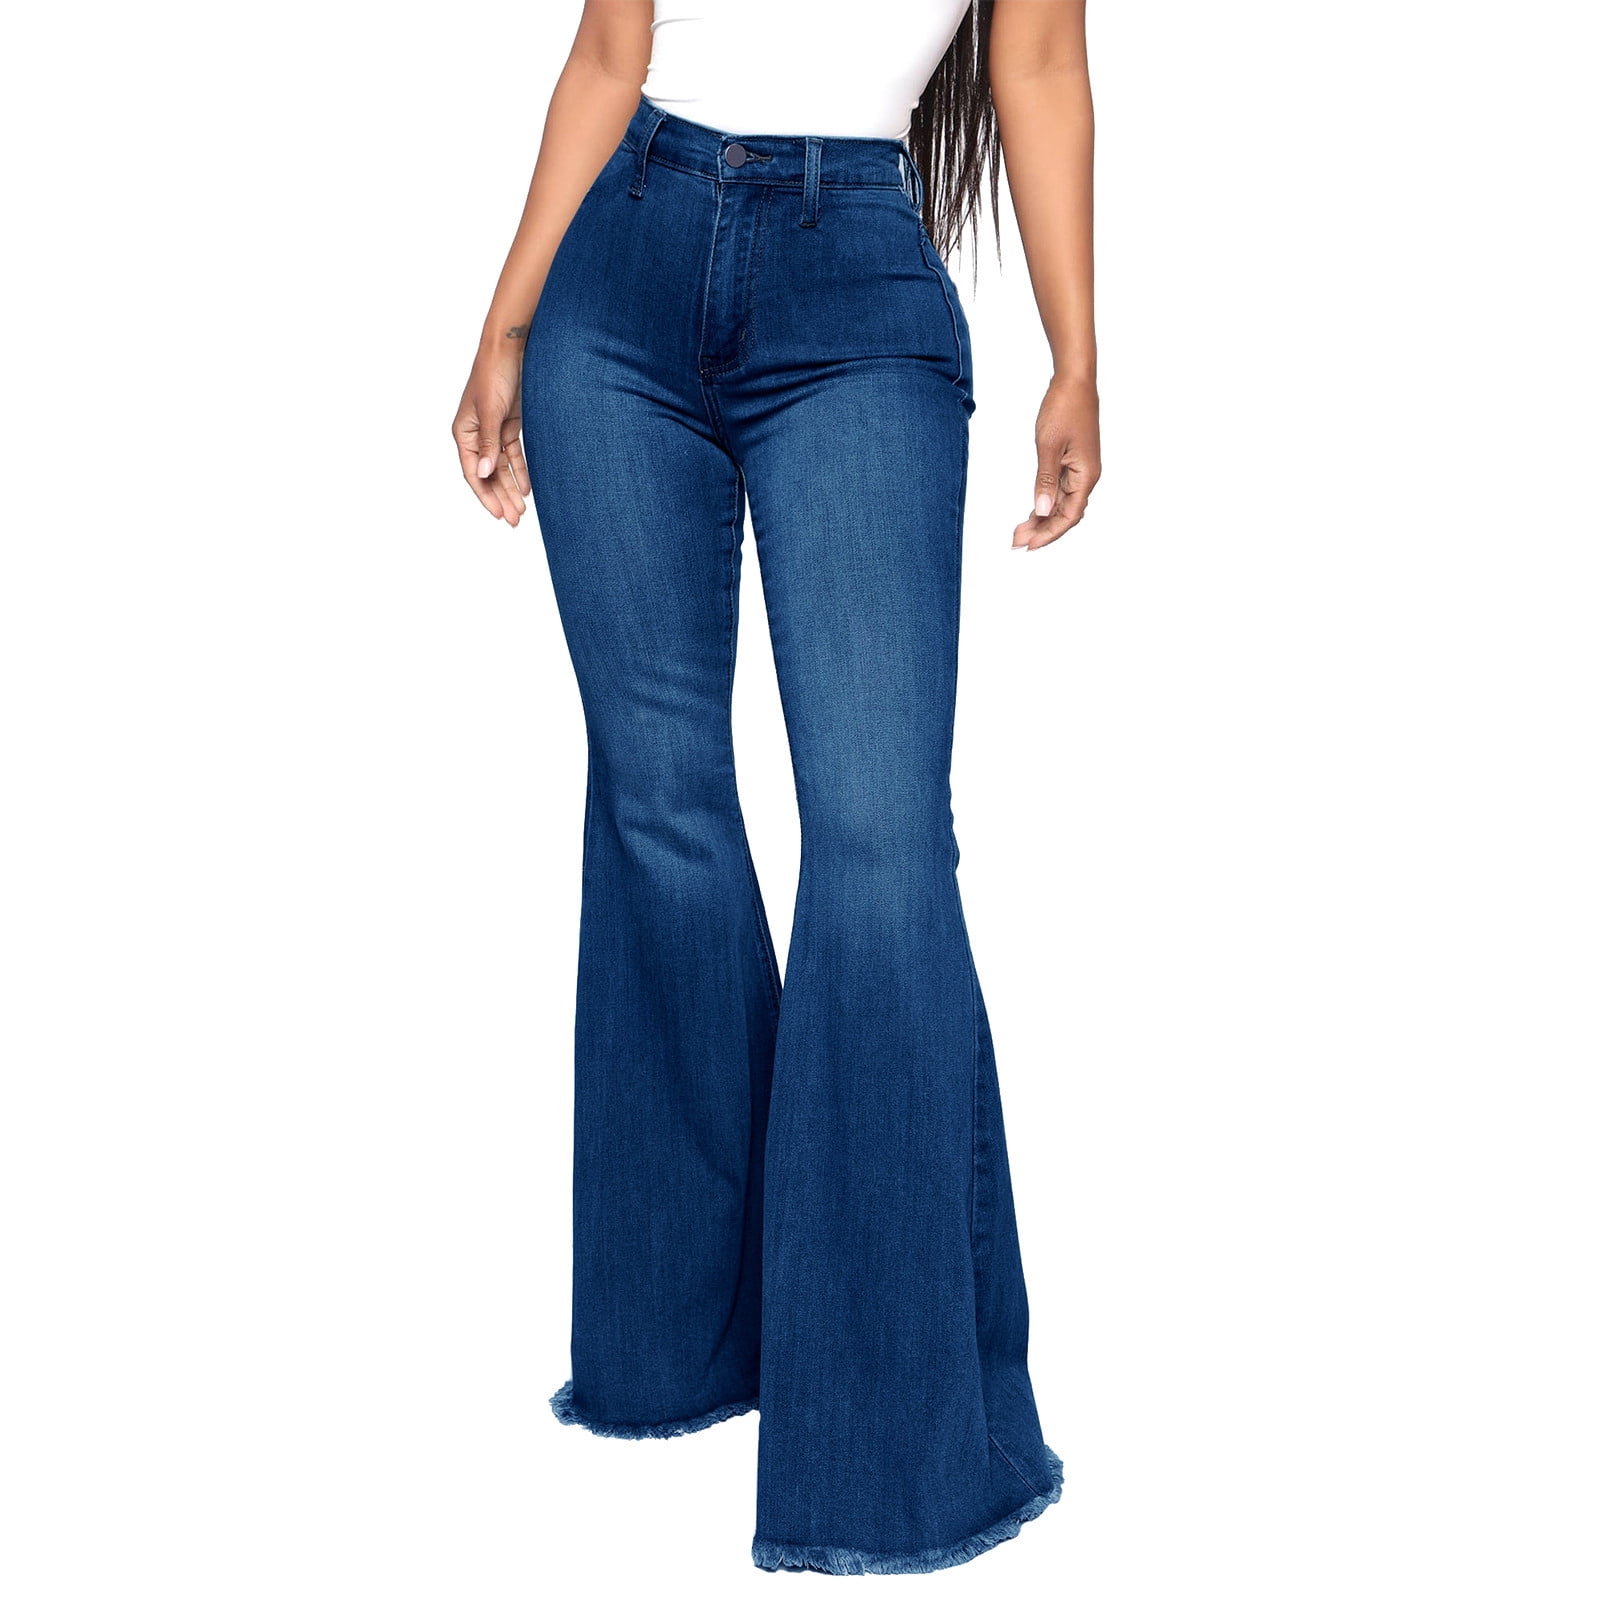 High Waist Flared Jeans Vintage 80s 90s Frayed Raw Hem Bell Bottom Denim  Long Pants for Women Fashion Casual S-3XL (Large, Dark Blue) 